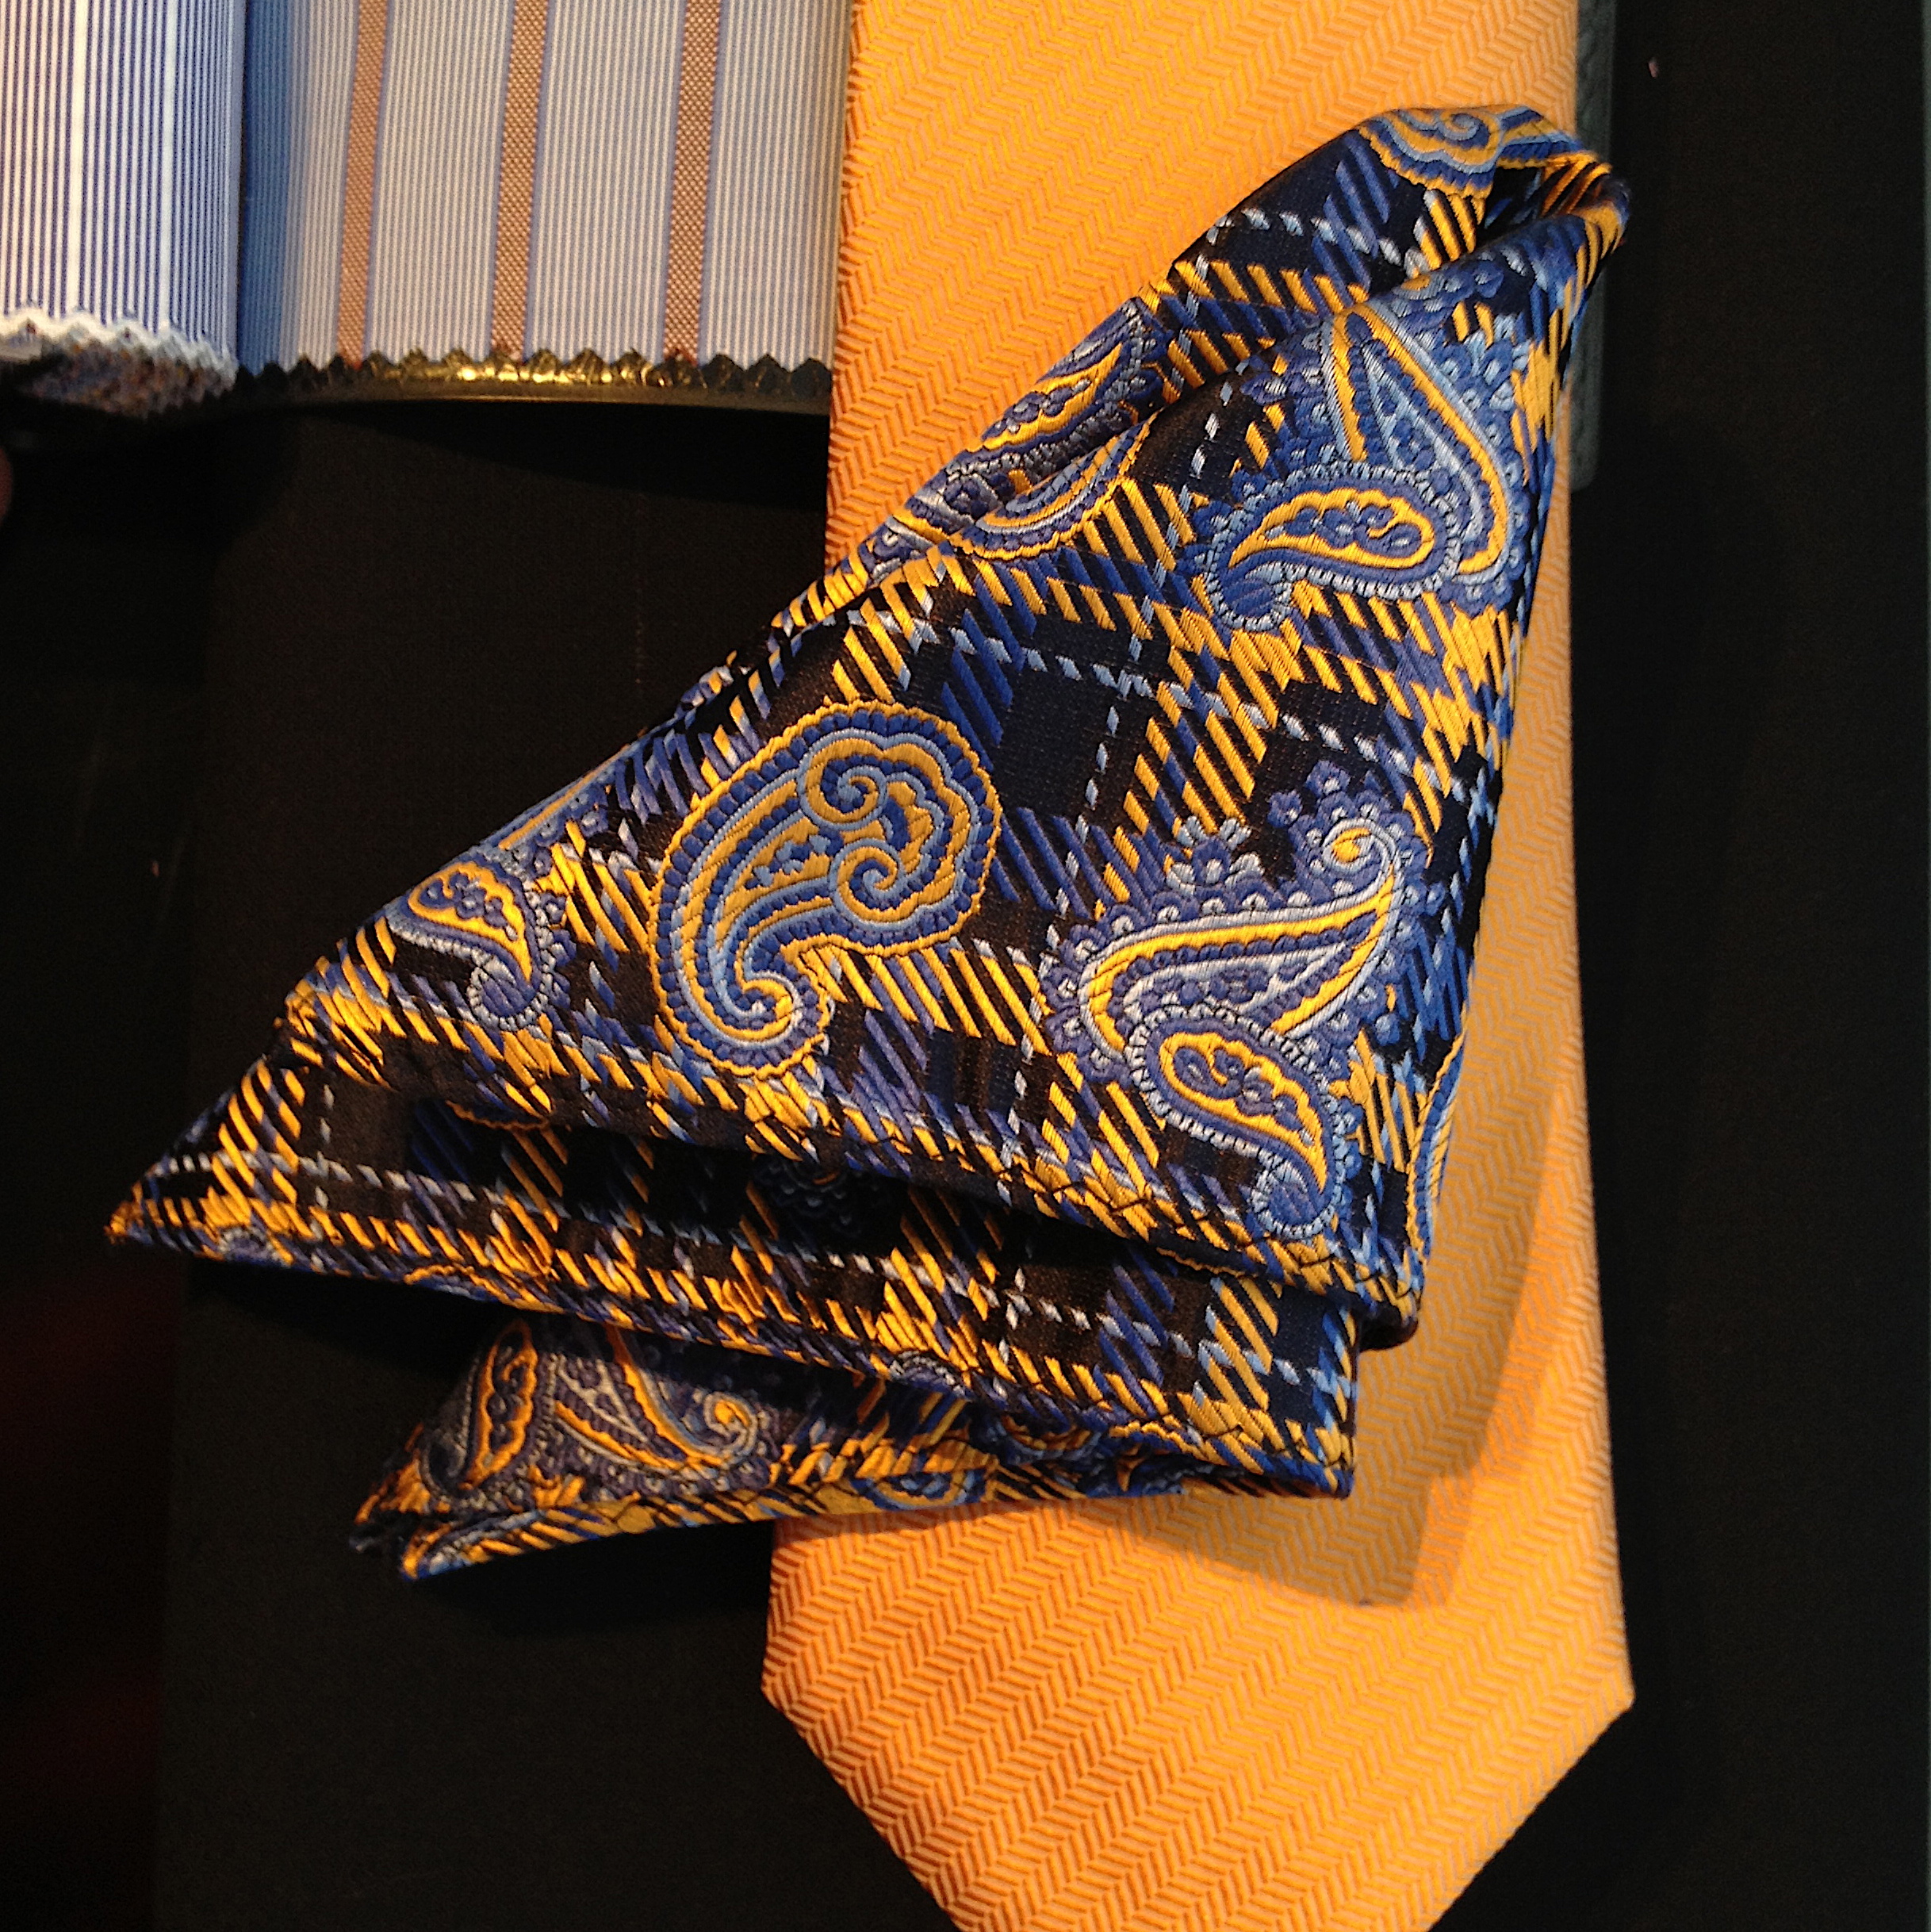 NELSON WADE, custom bespoke silk ties and silk pocket square.